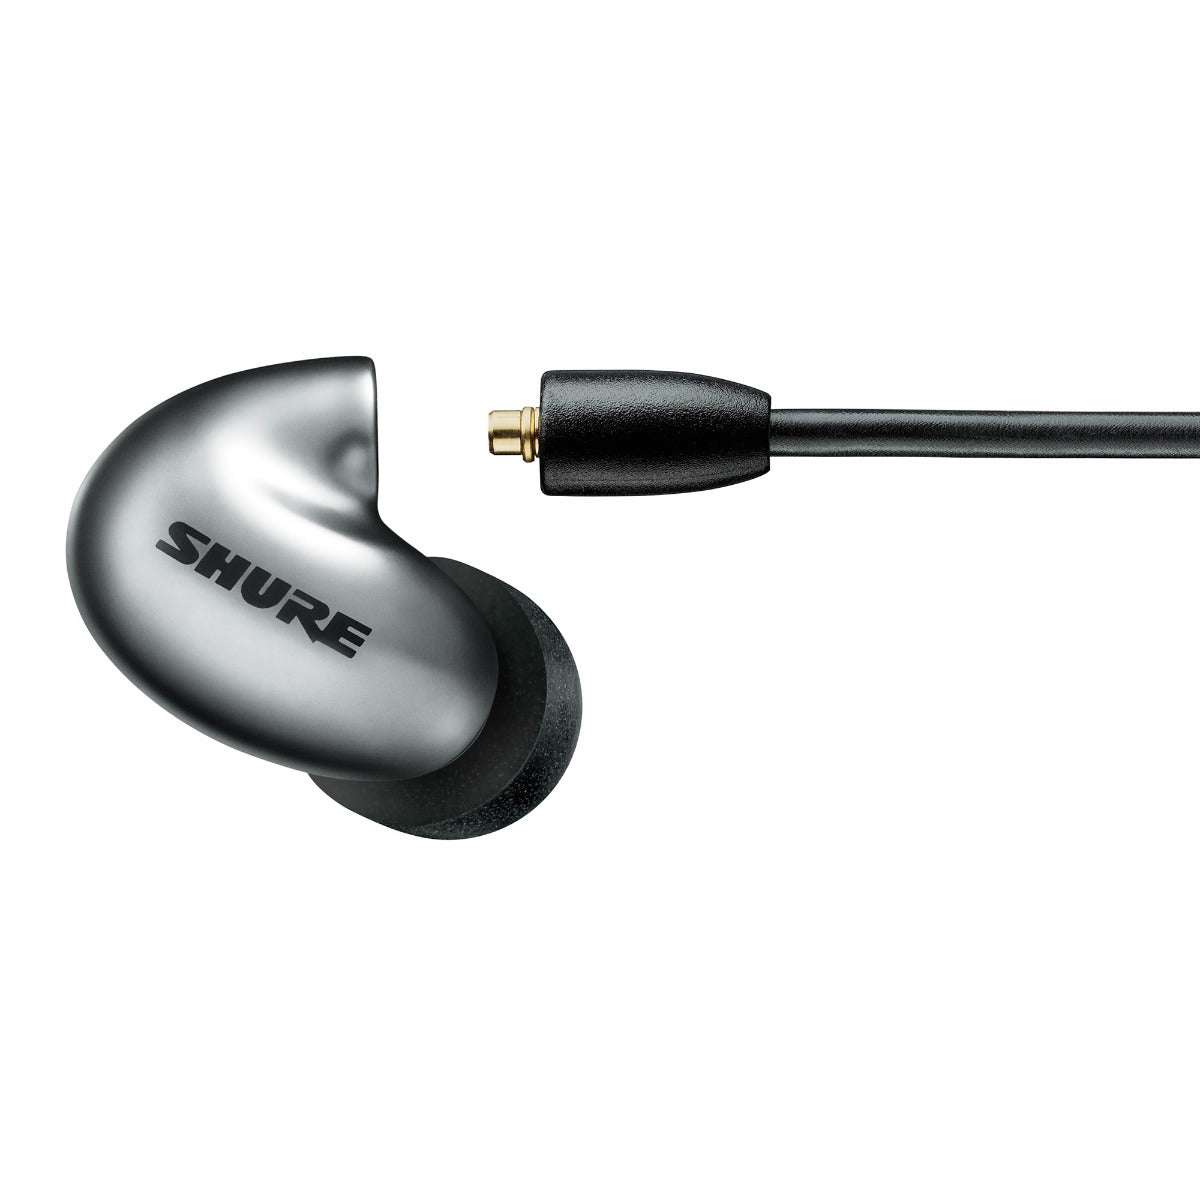 Shure SE Pro Gen 2 Sound Isolating Earphones   Graphite – Kraft